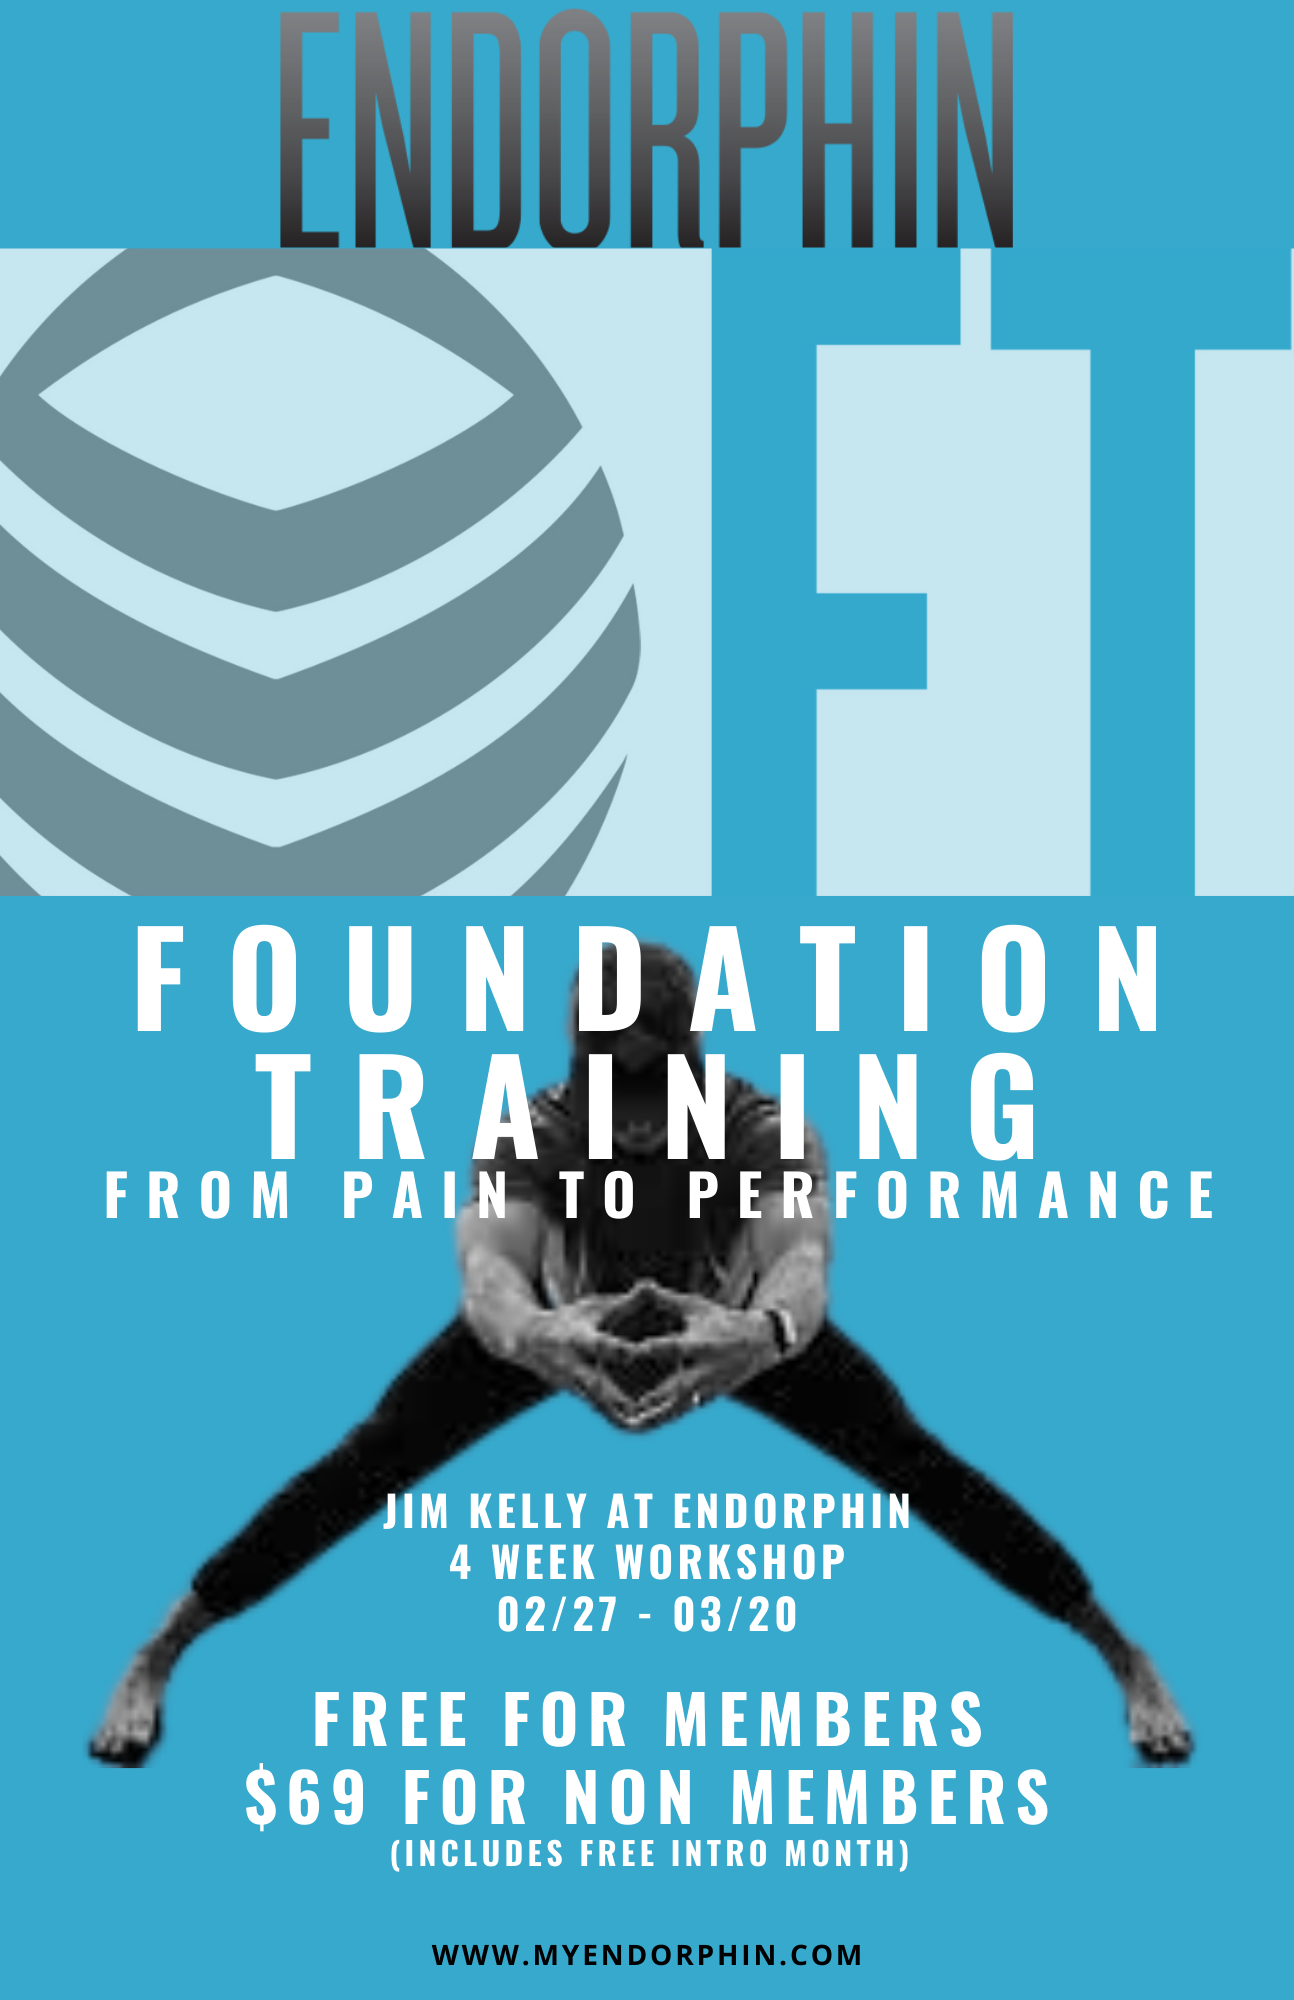 
Foundation Training with Jim Kelly